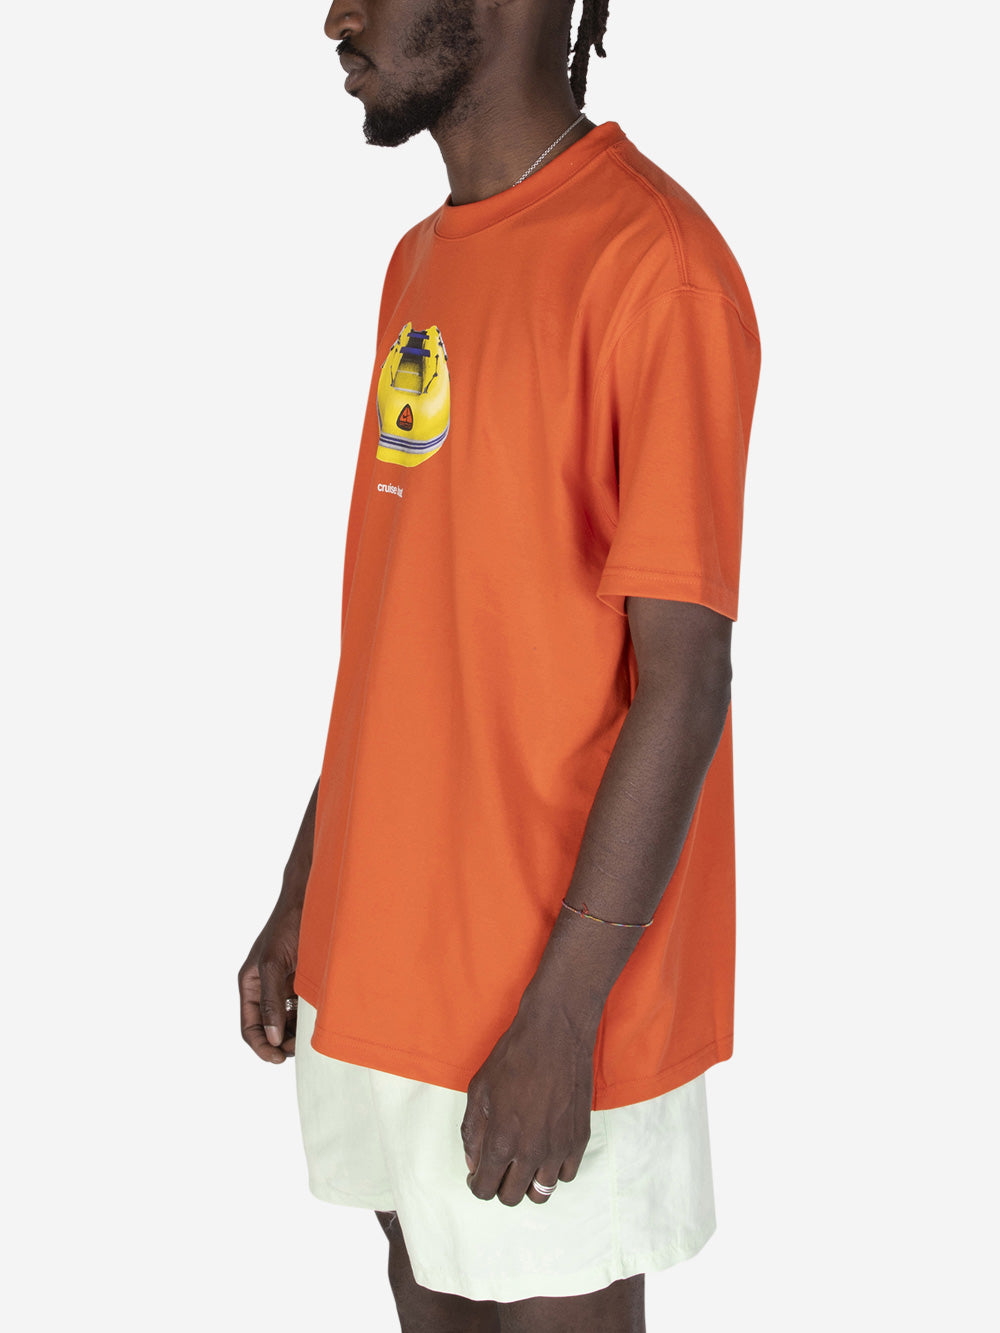 NIKE ACG ACG T-shirt "Cruise Boat" arancione Urbanstaroma